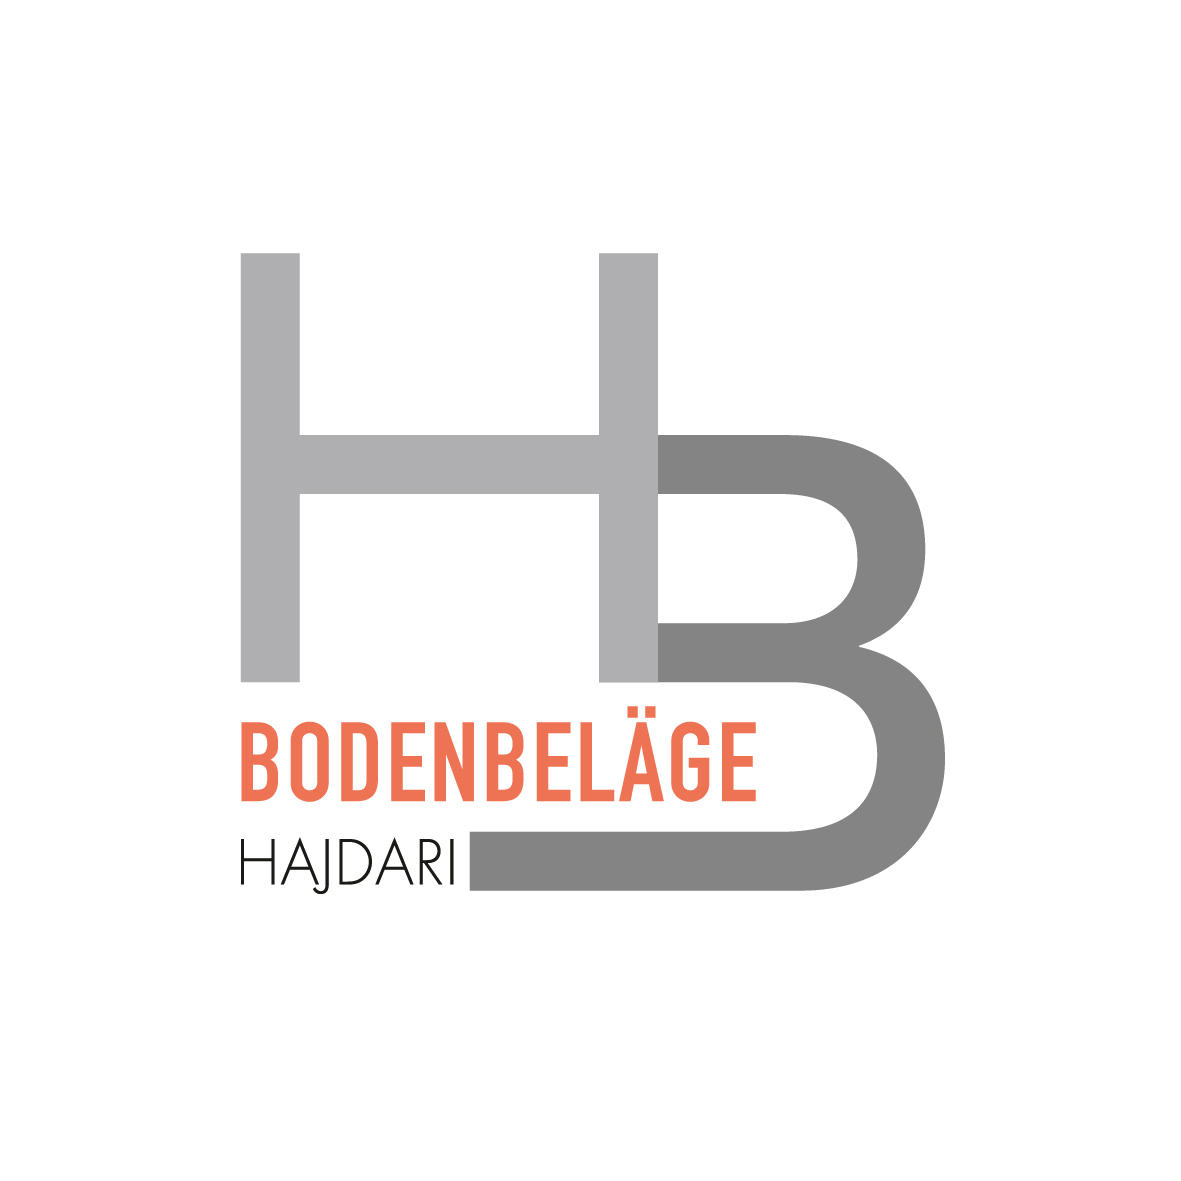 Bodenbeläge Hajdari GmbH Logo